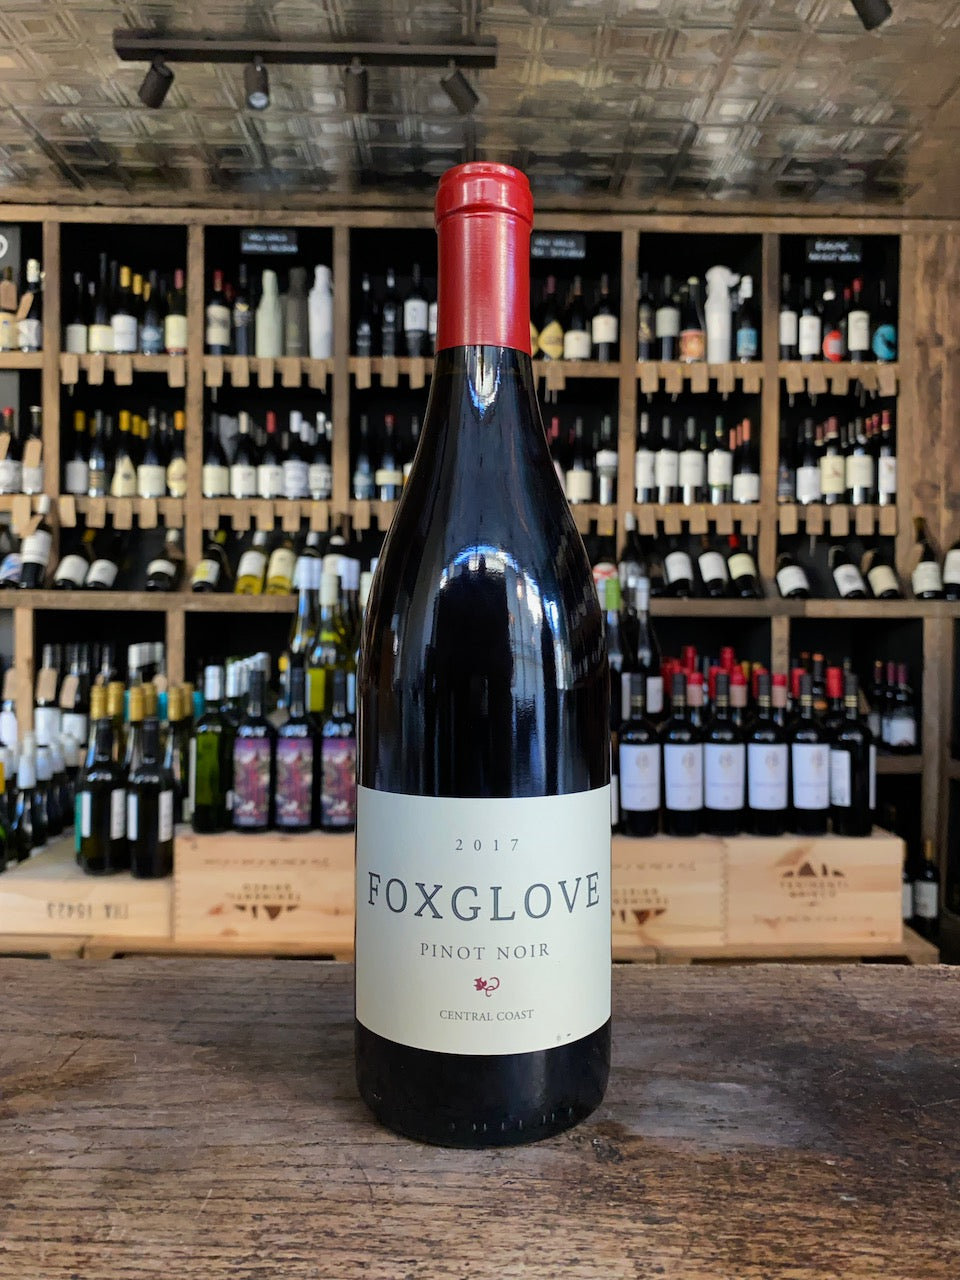 Foxglove Pinot Noir, Varner Wines, Central Coast USA